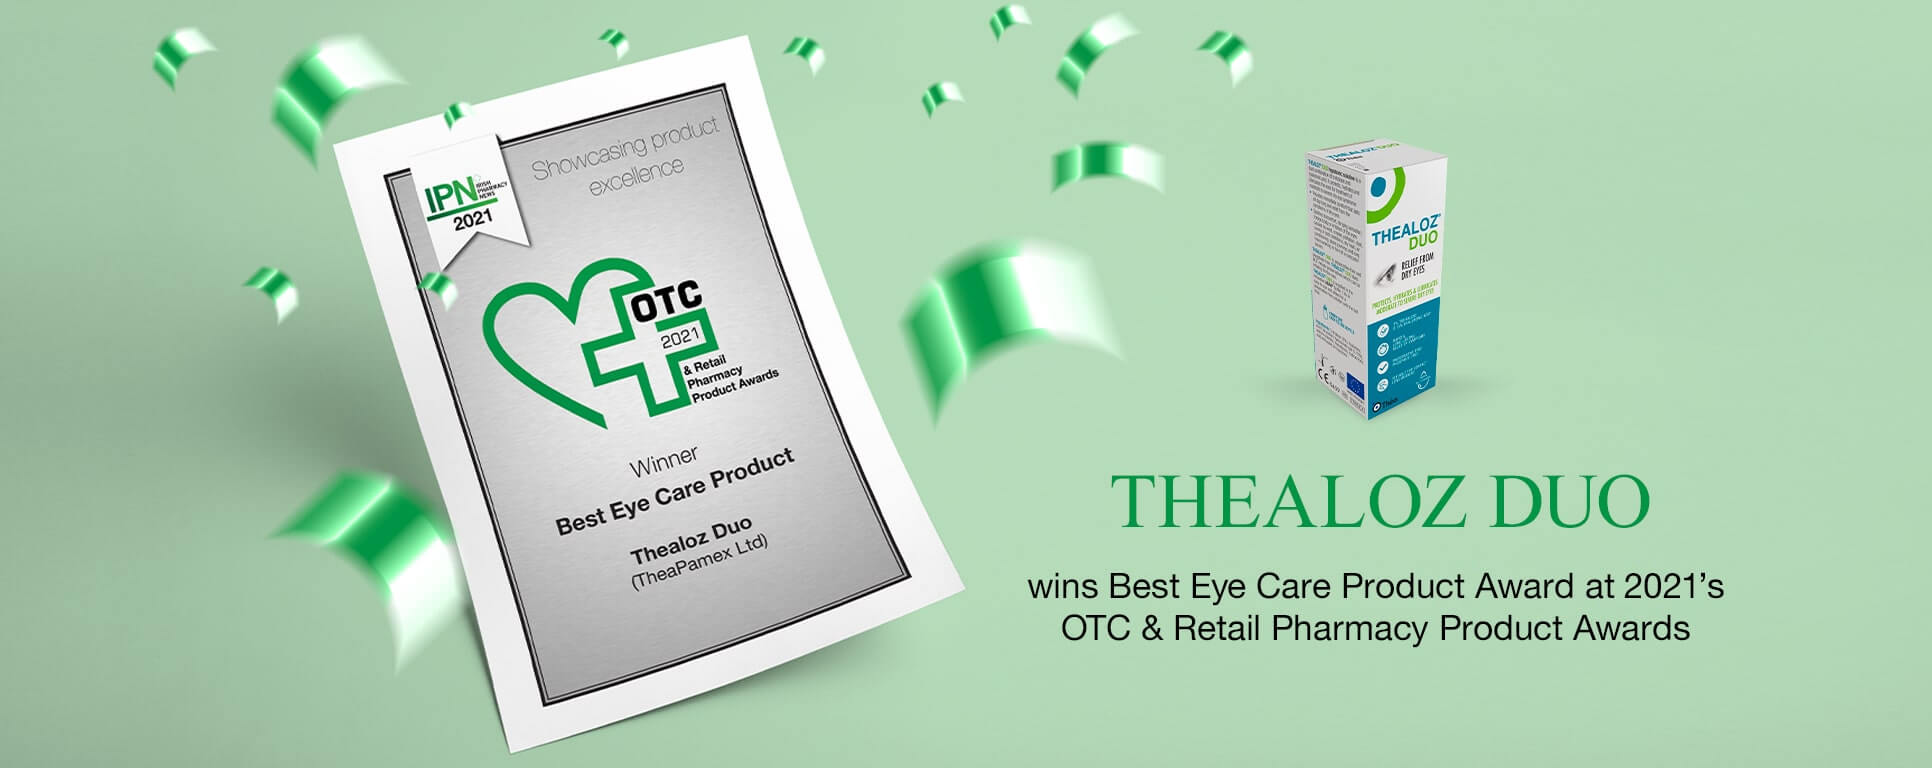 Thealoz Duo wins Ireland's Best Eye Care Product Award - TheaPamex-min